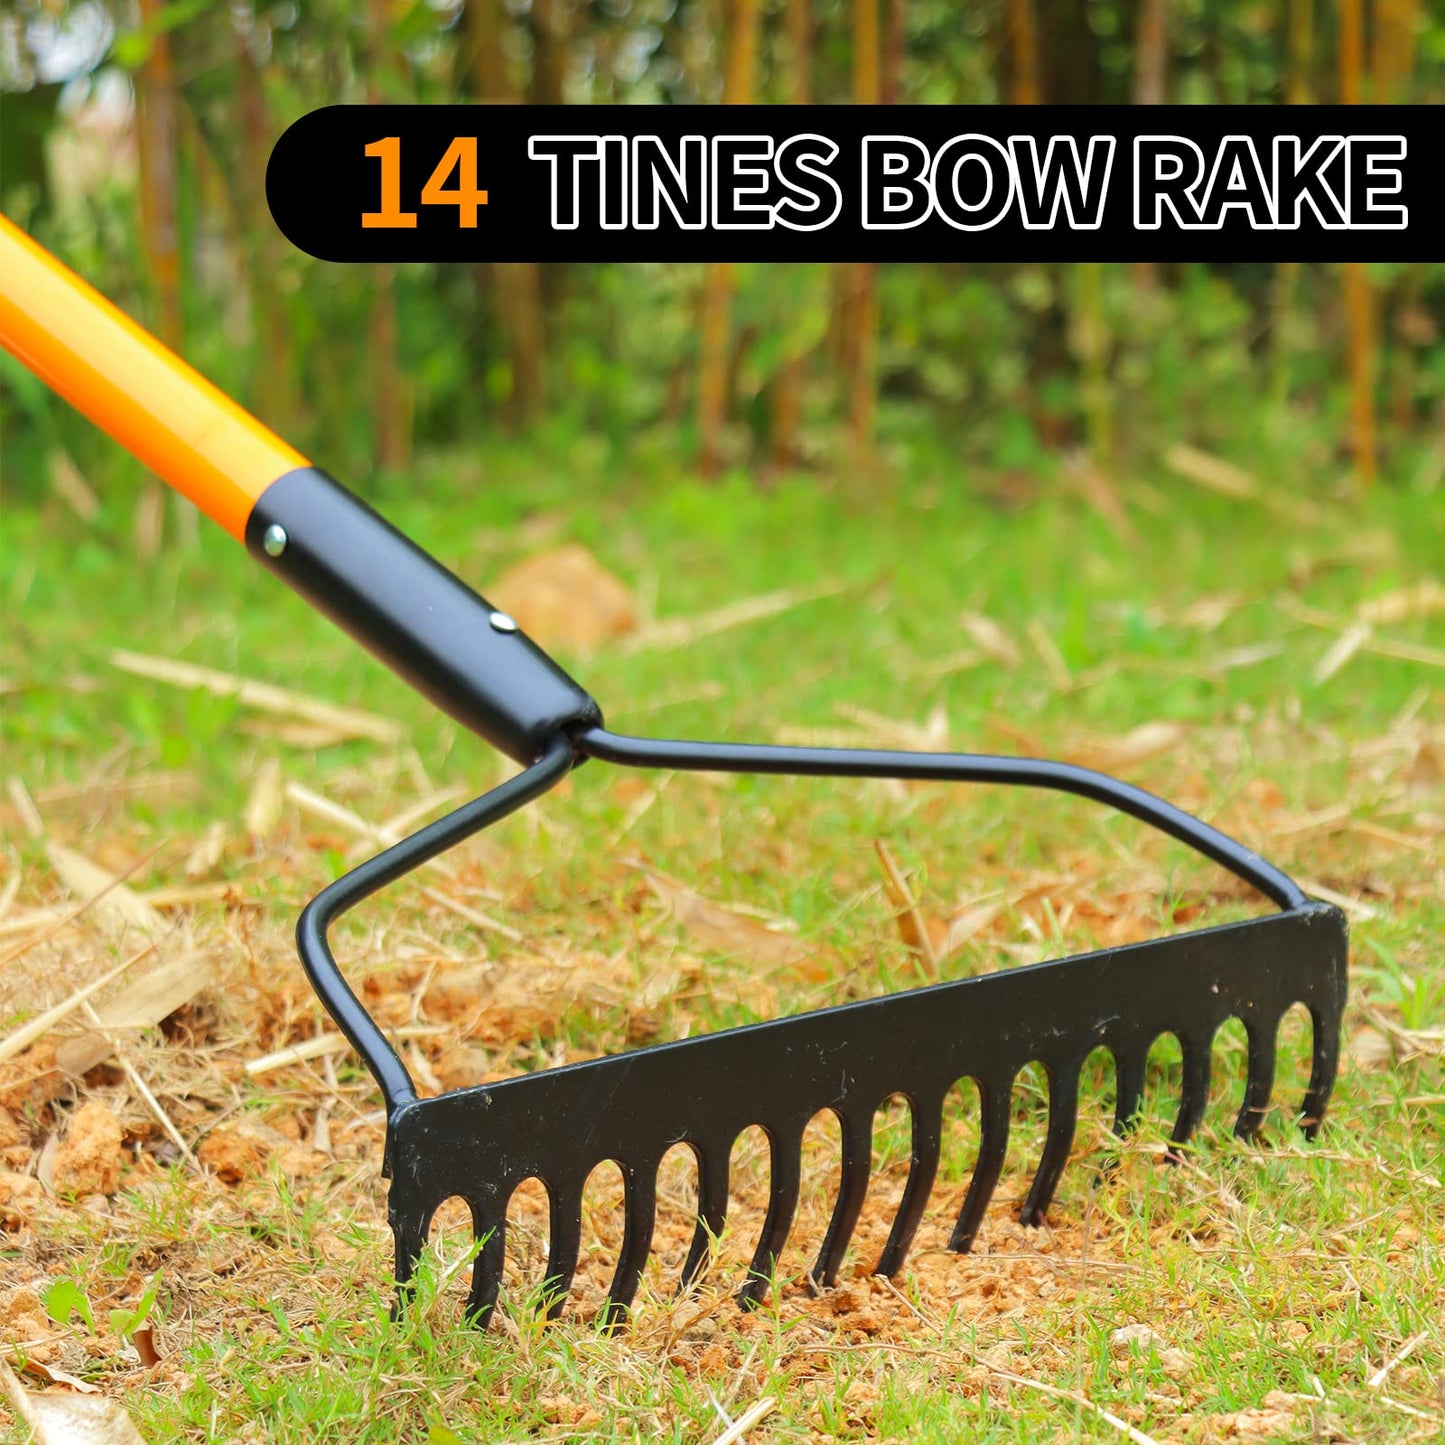 VNIMTI Garden Rake for Gardening, Heavy Duty Garden Rake for Lawns, 14 Tines Bow Rake with Fiberglass Handle, 58 Inches